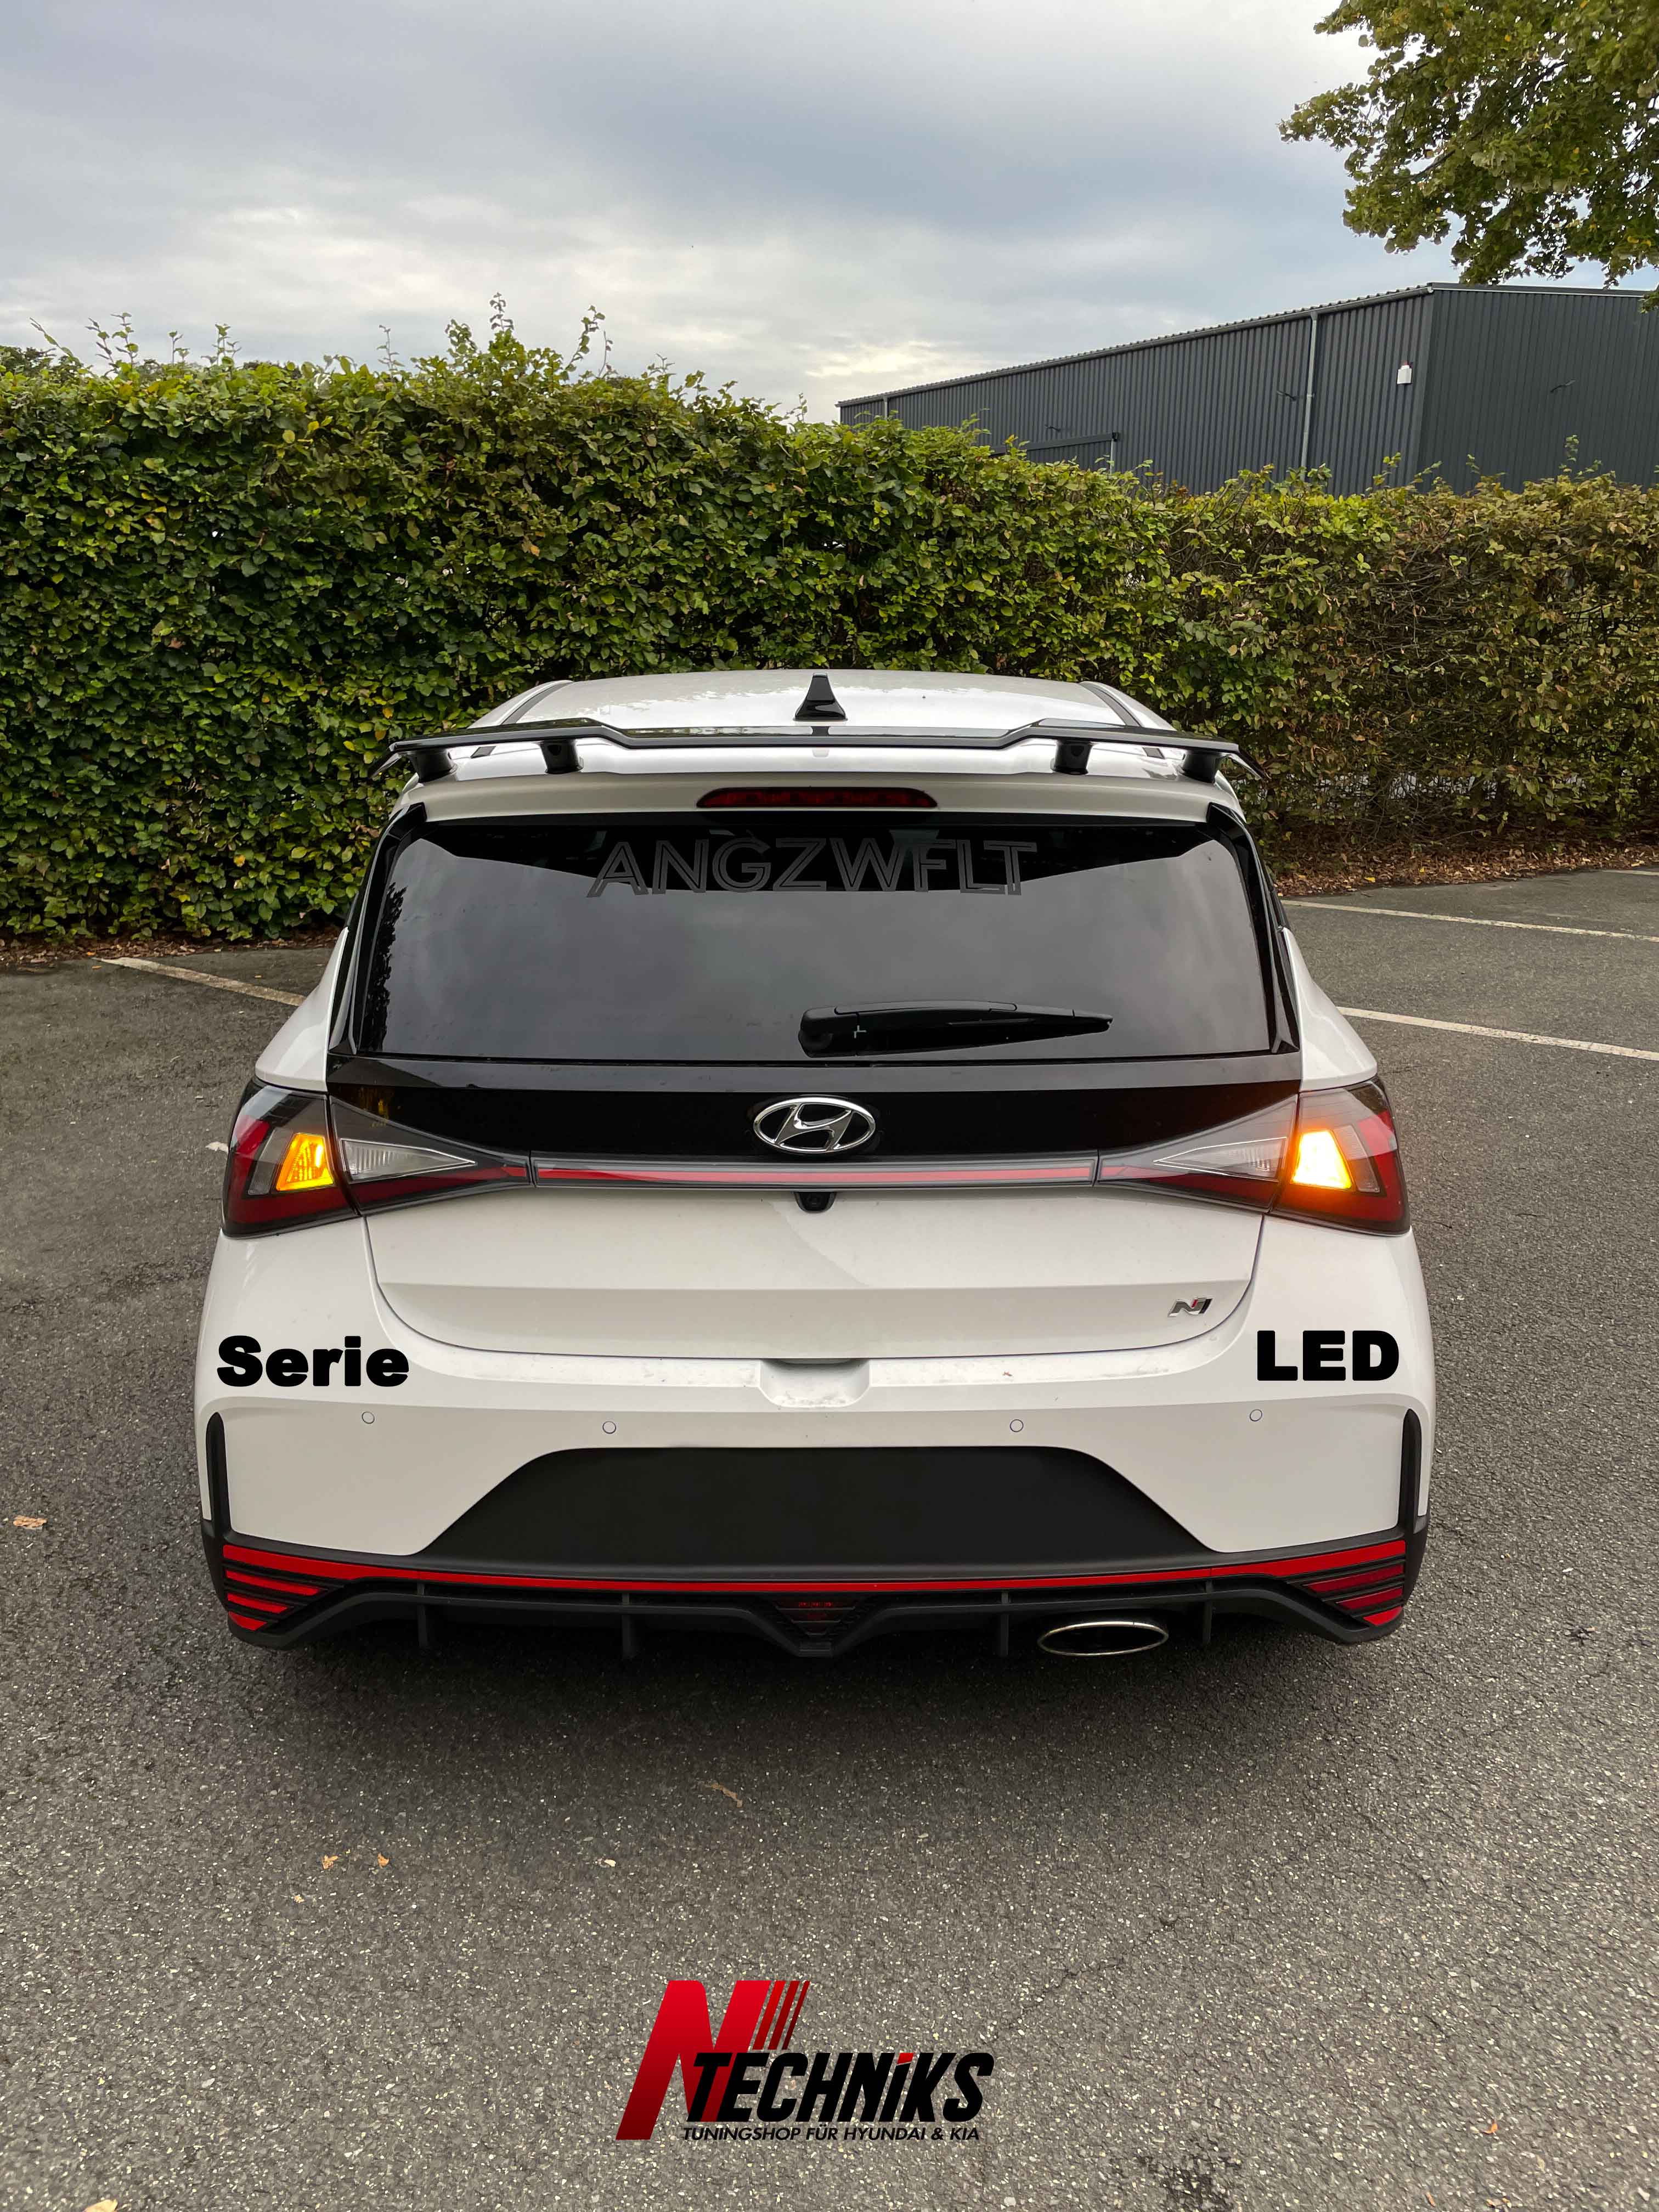 LED Blinker für Hyundai i20N